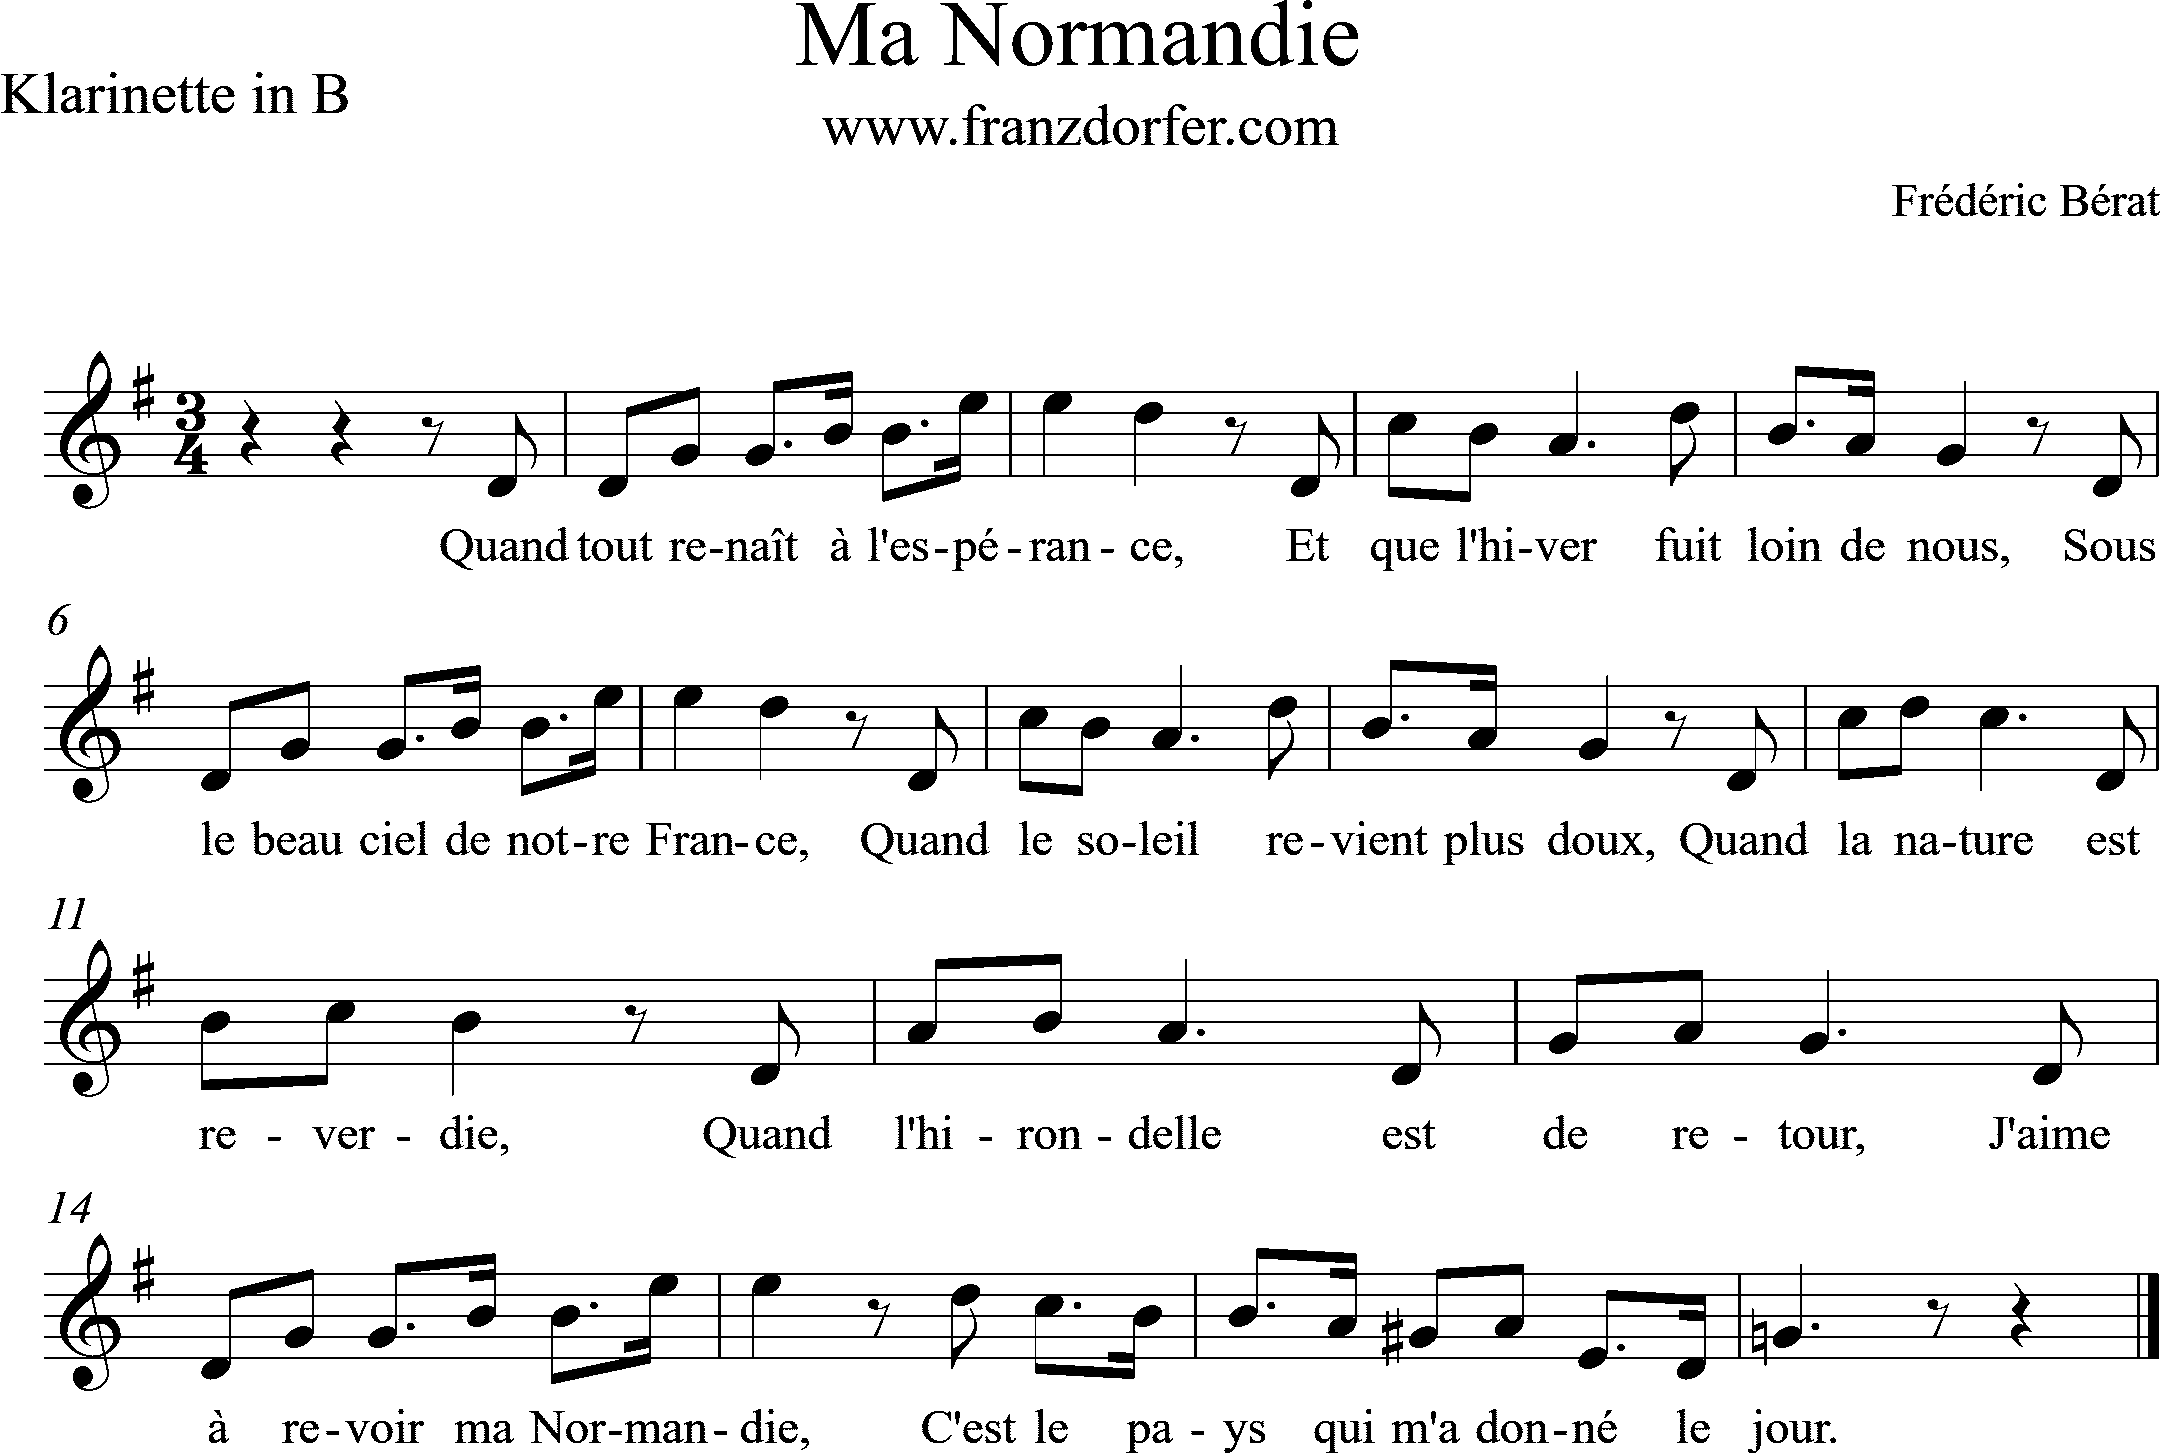 Clarinet part, Ma Normandie